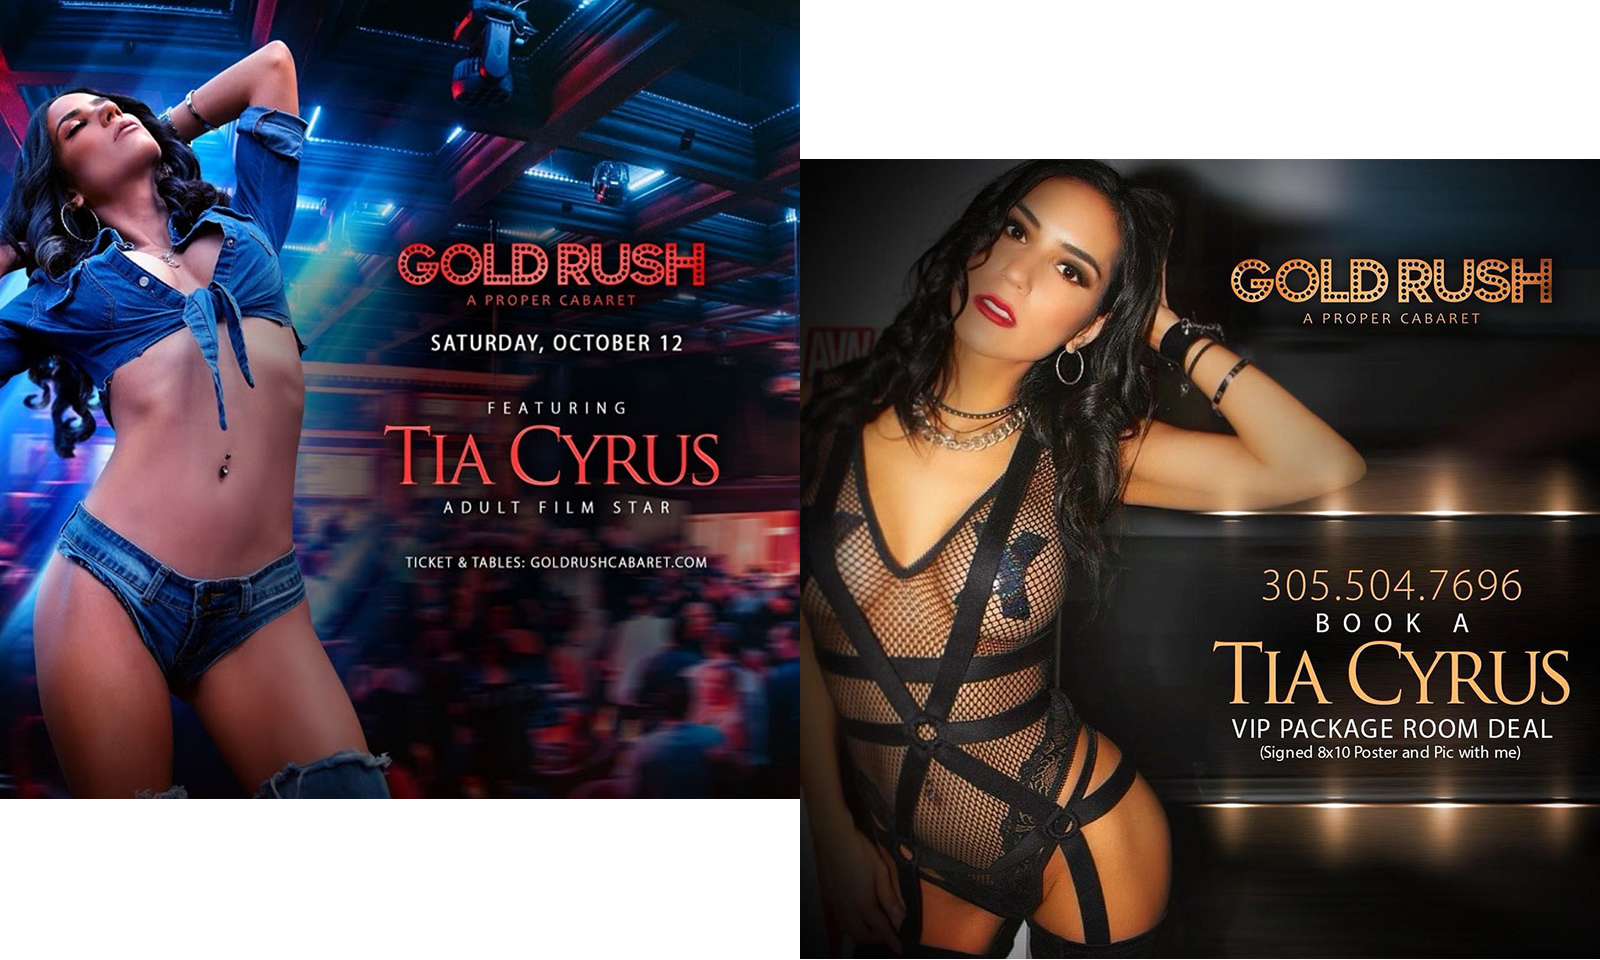 Tia Cyrus to Feature at Gold Rush Cabaret This Saturday